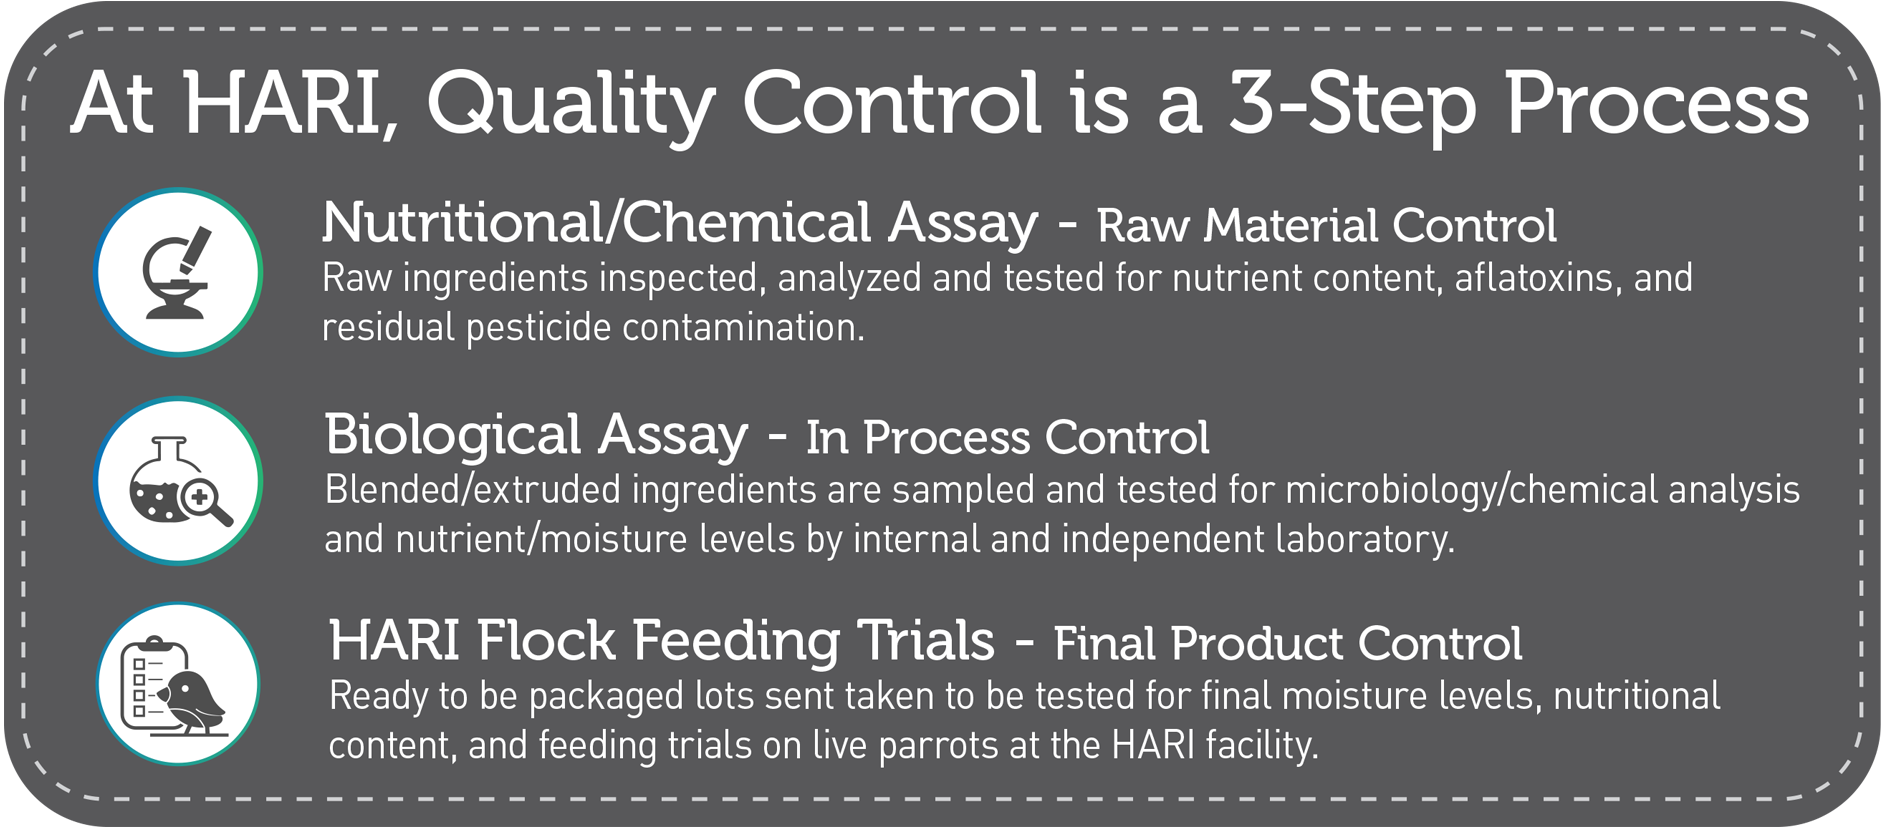 Quality Control Process - HARI